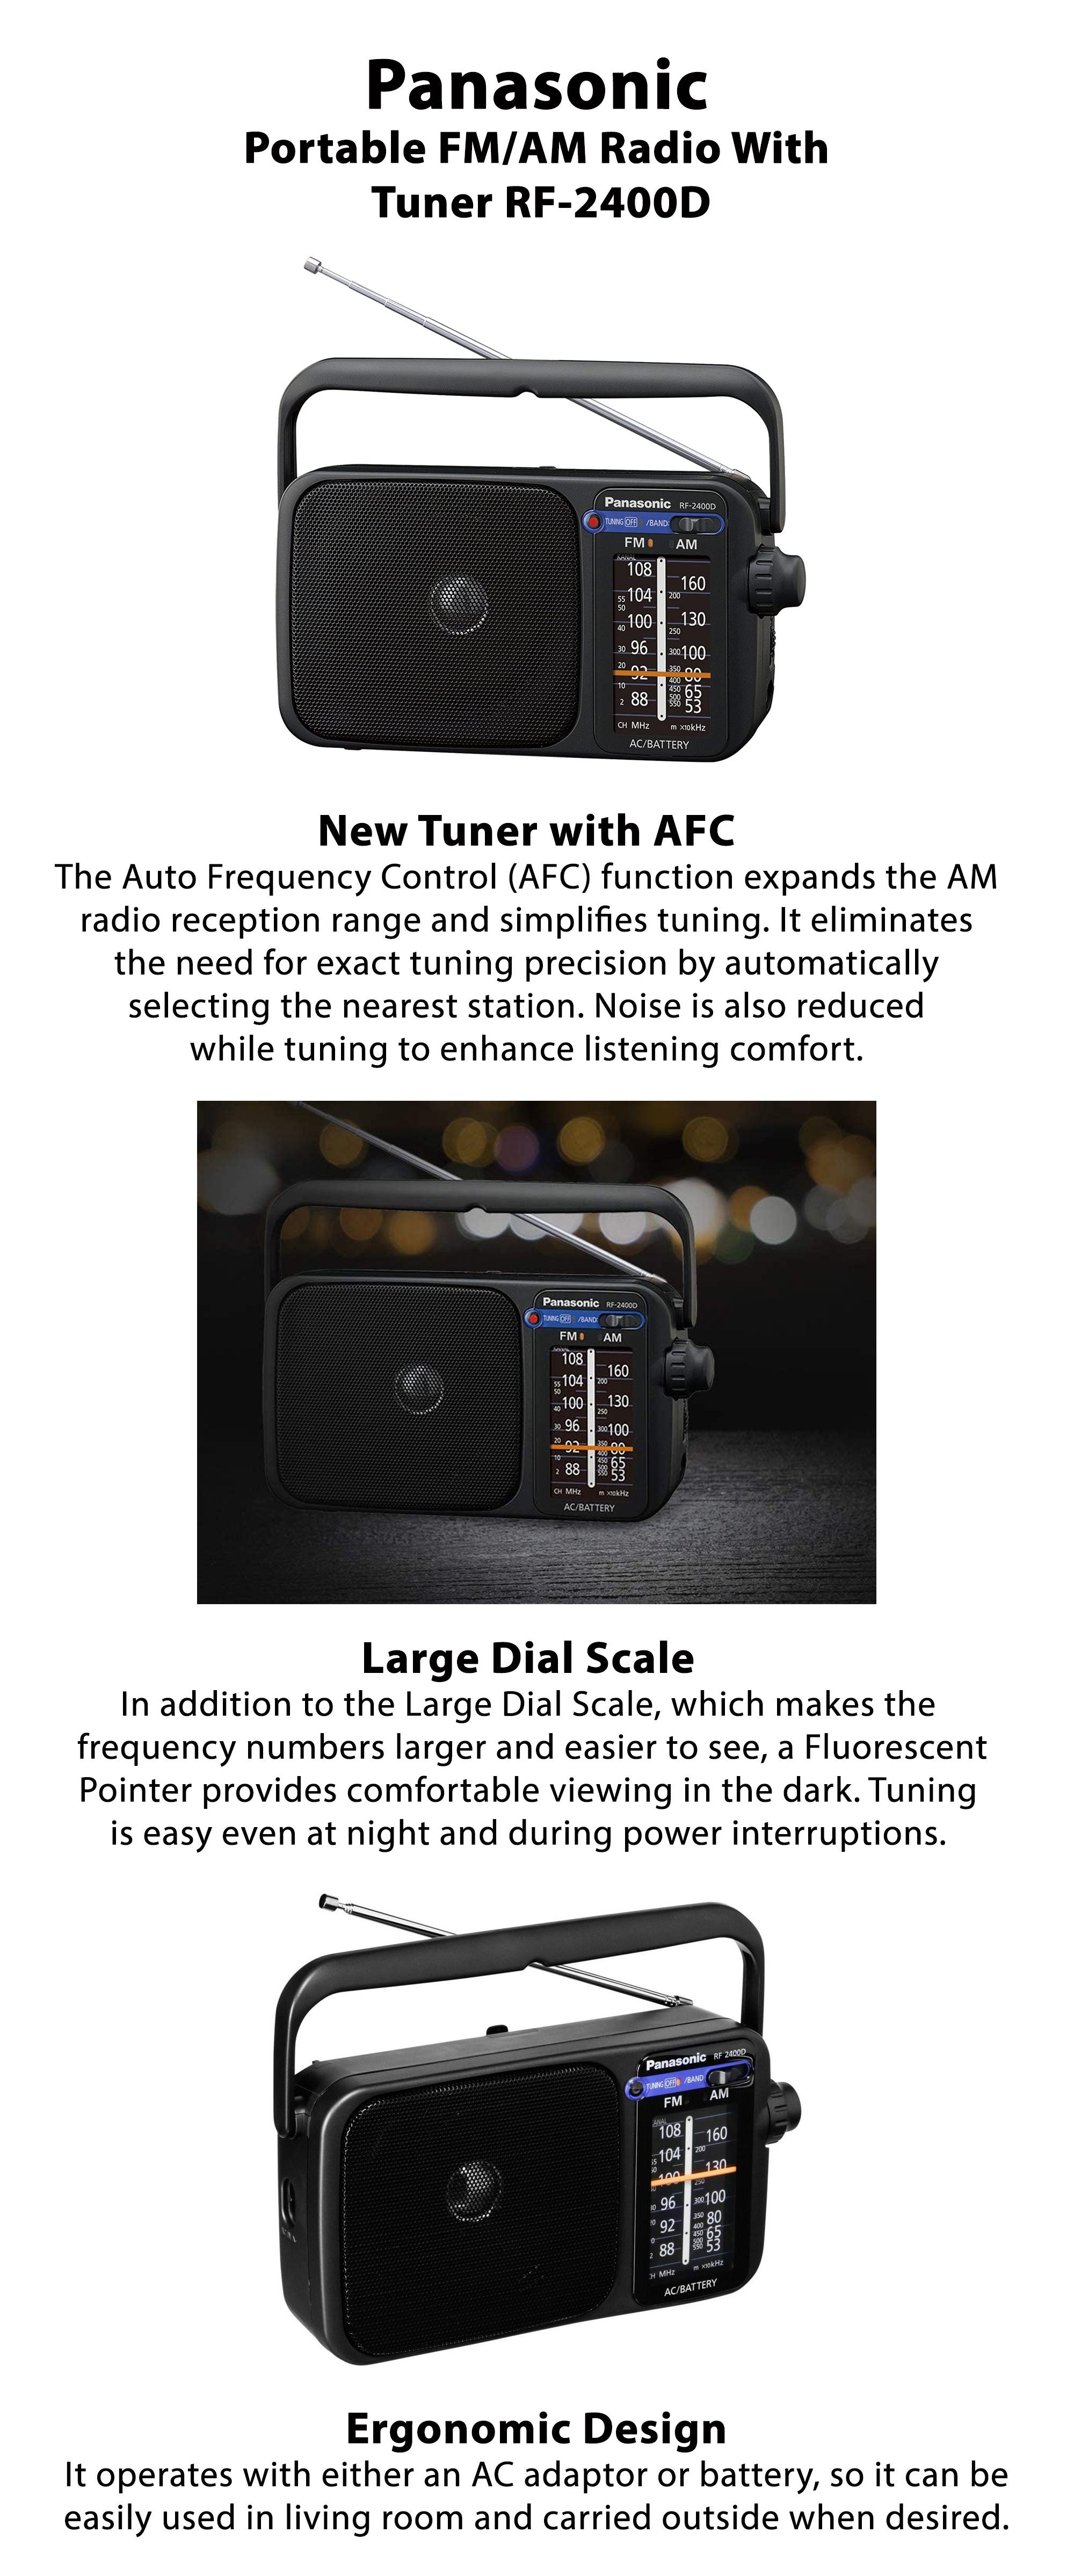 Panasonic RF-2400D Portable FM/AM Radio with AFC Tuner RF-2400